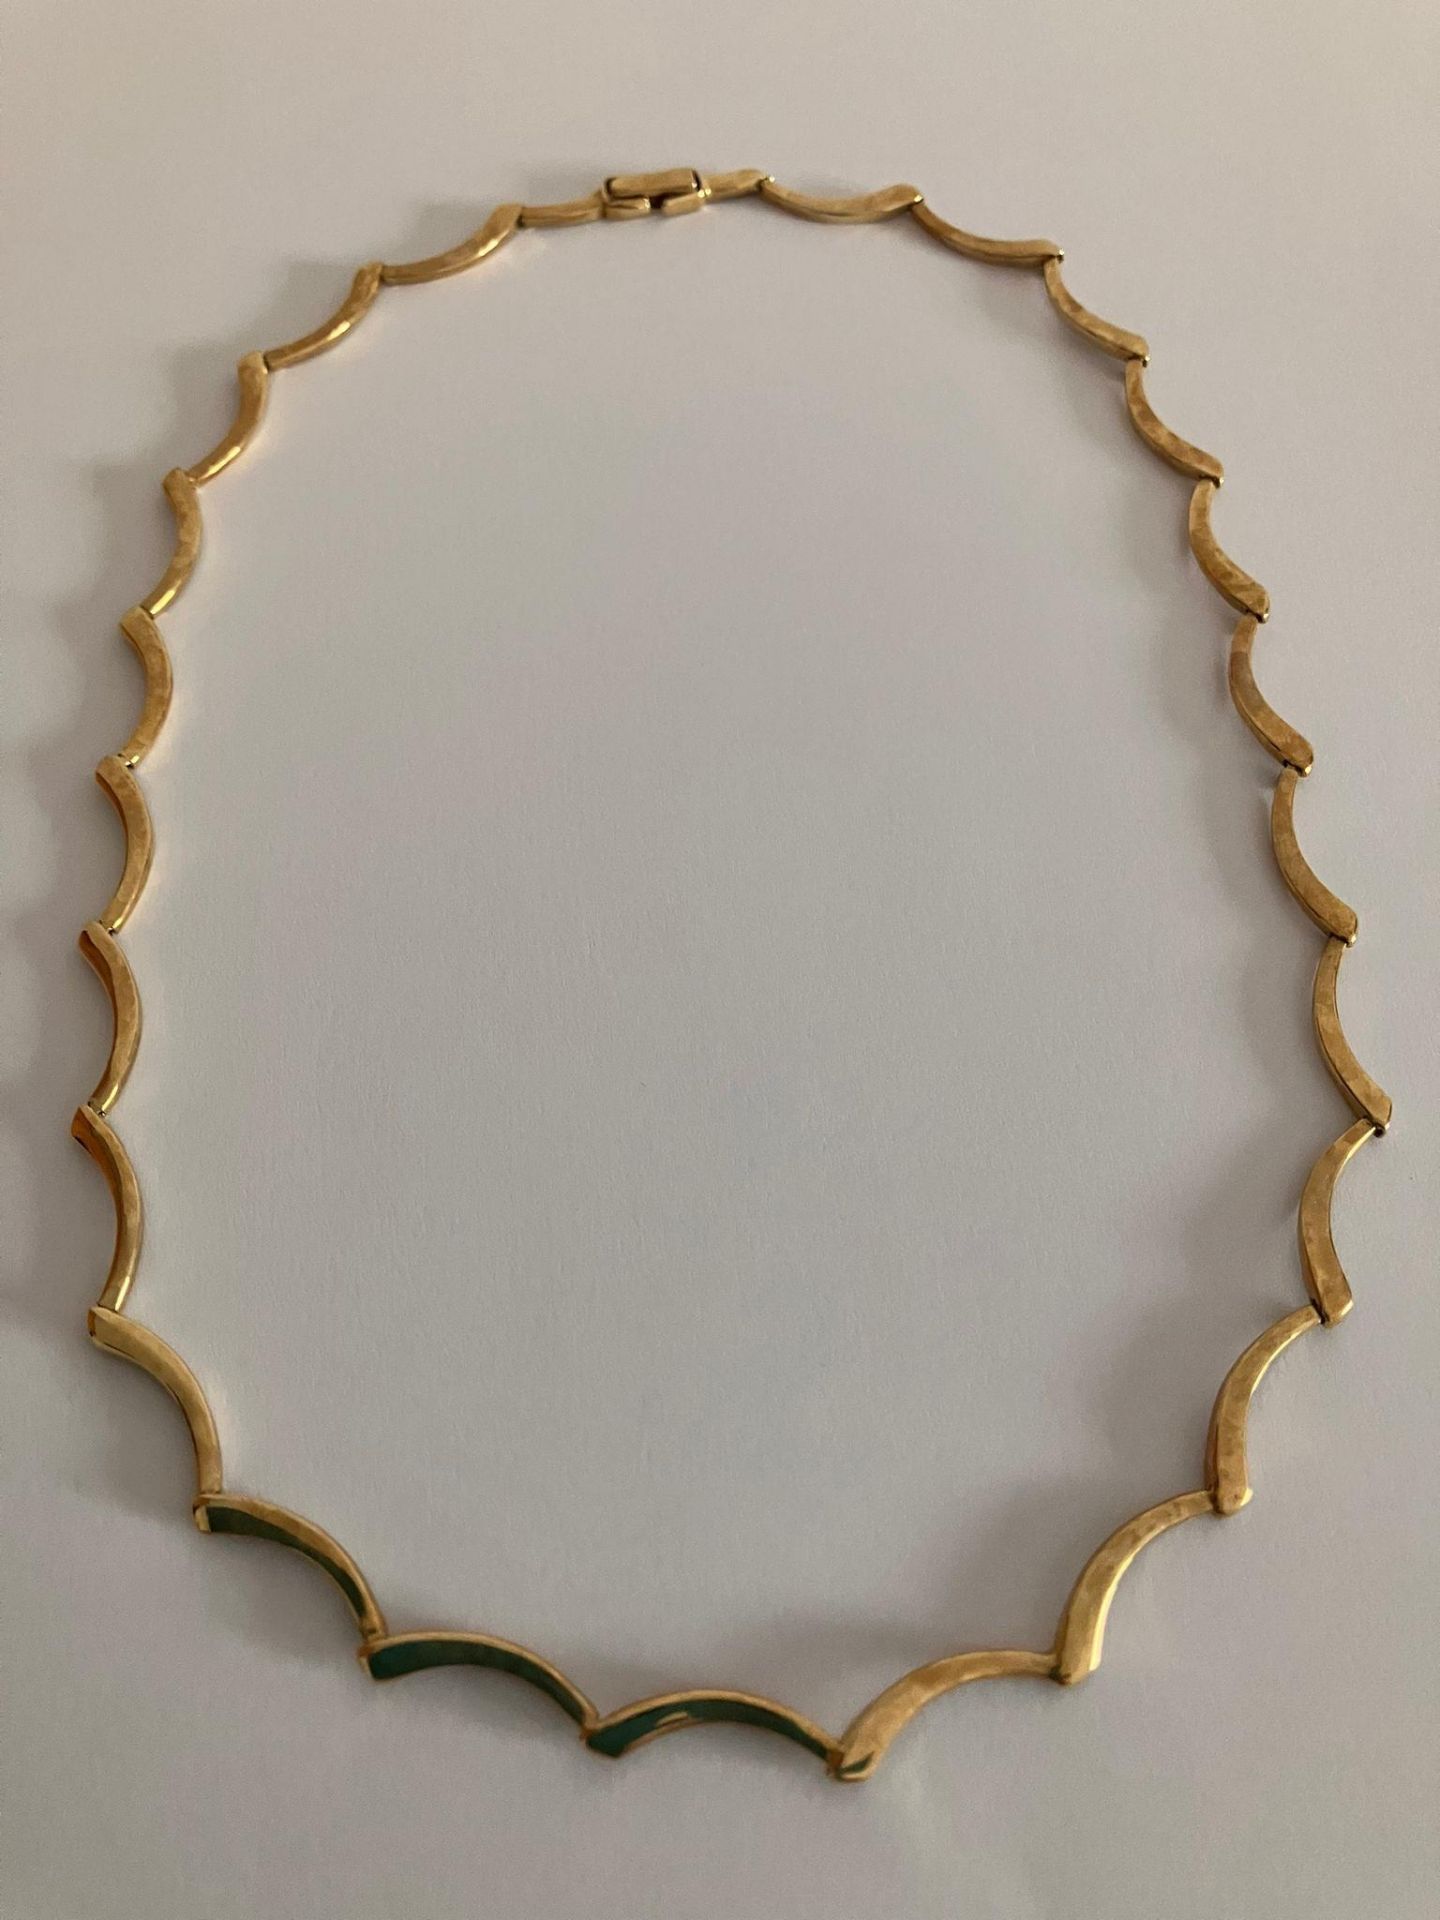 Attractive and unusual 9 carat YELLOW GOLD NECKLACE with wavy design. Full UK hallmark. 11 grams. 45 - Bild 2 aus 3